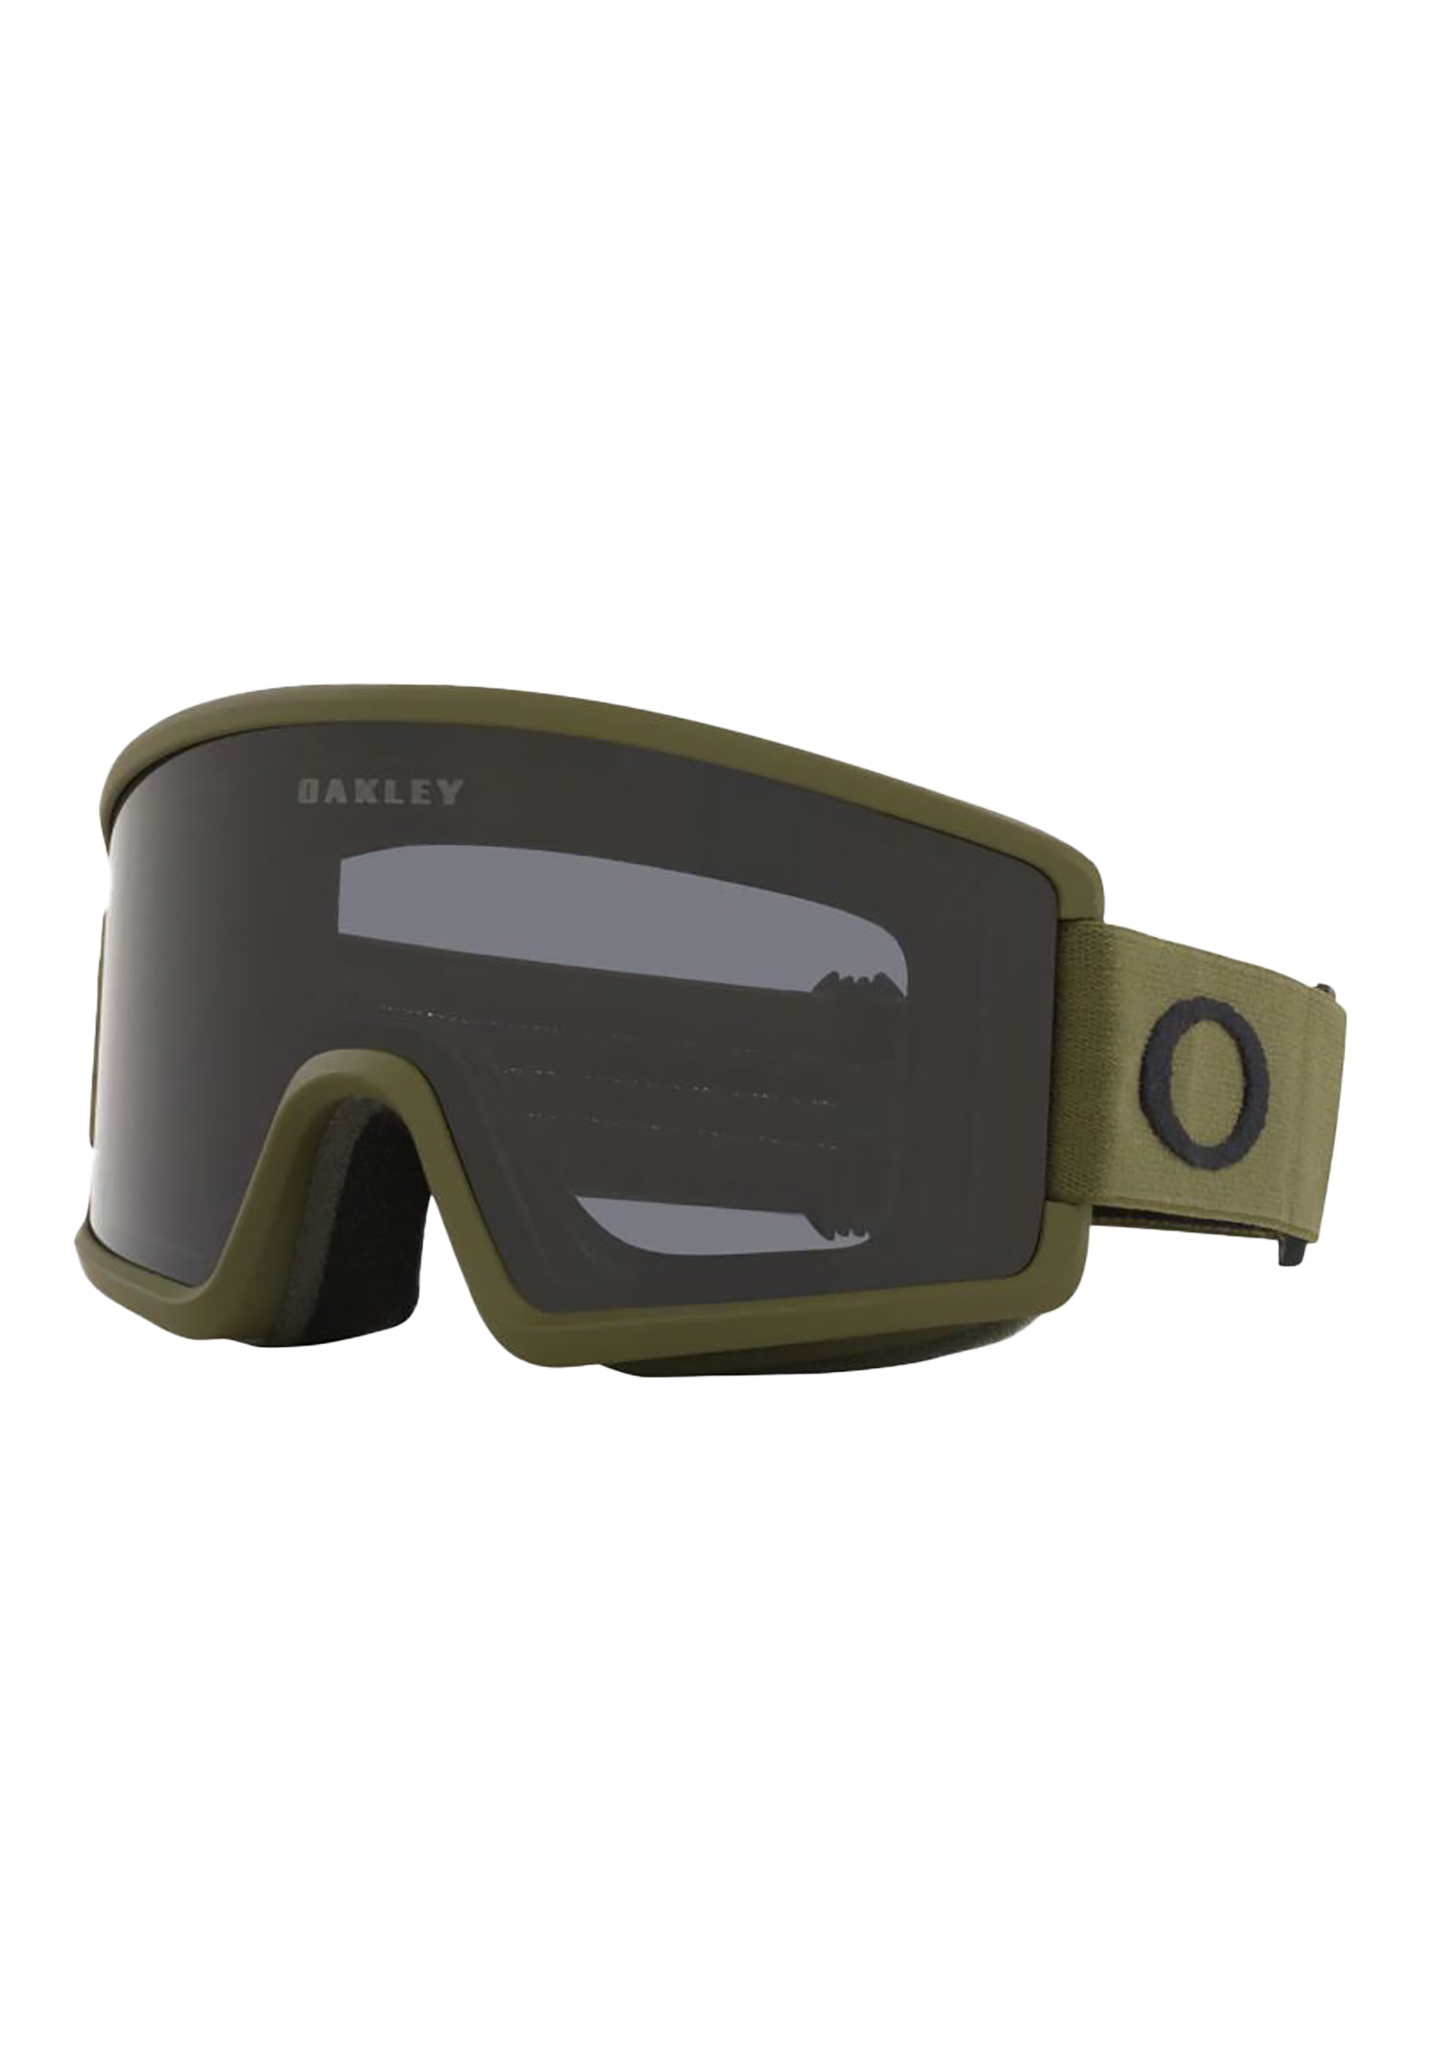 Oakley Target Line M Snowboardbrillen dunkler pinsel/dunkelgrau One Size